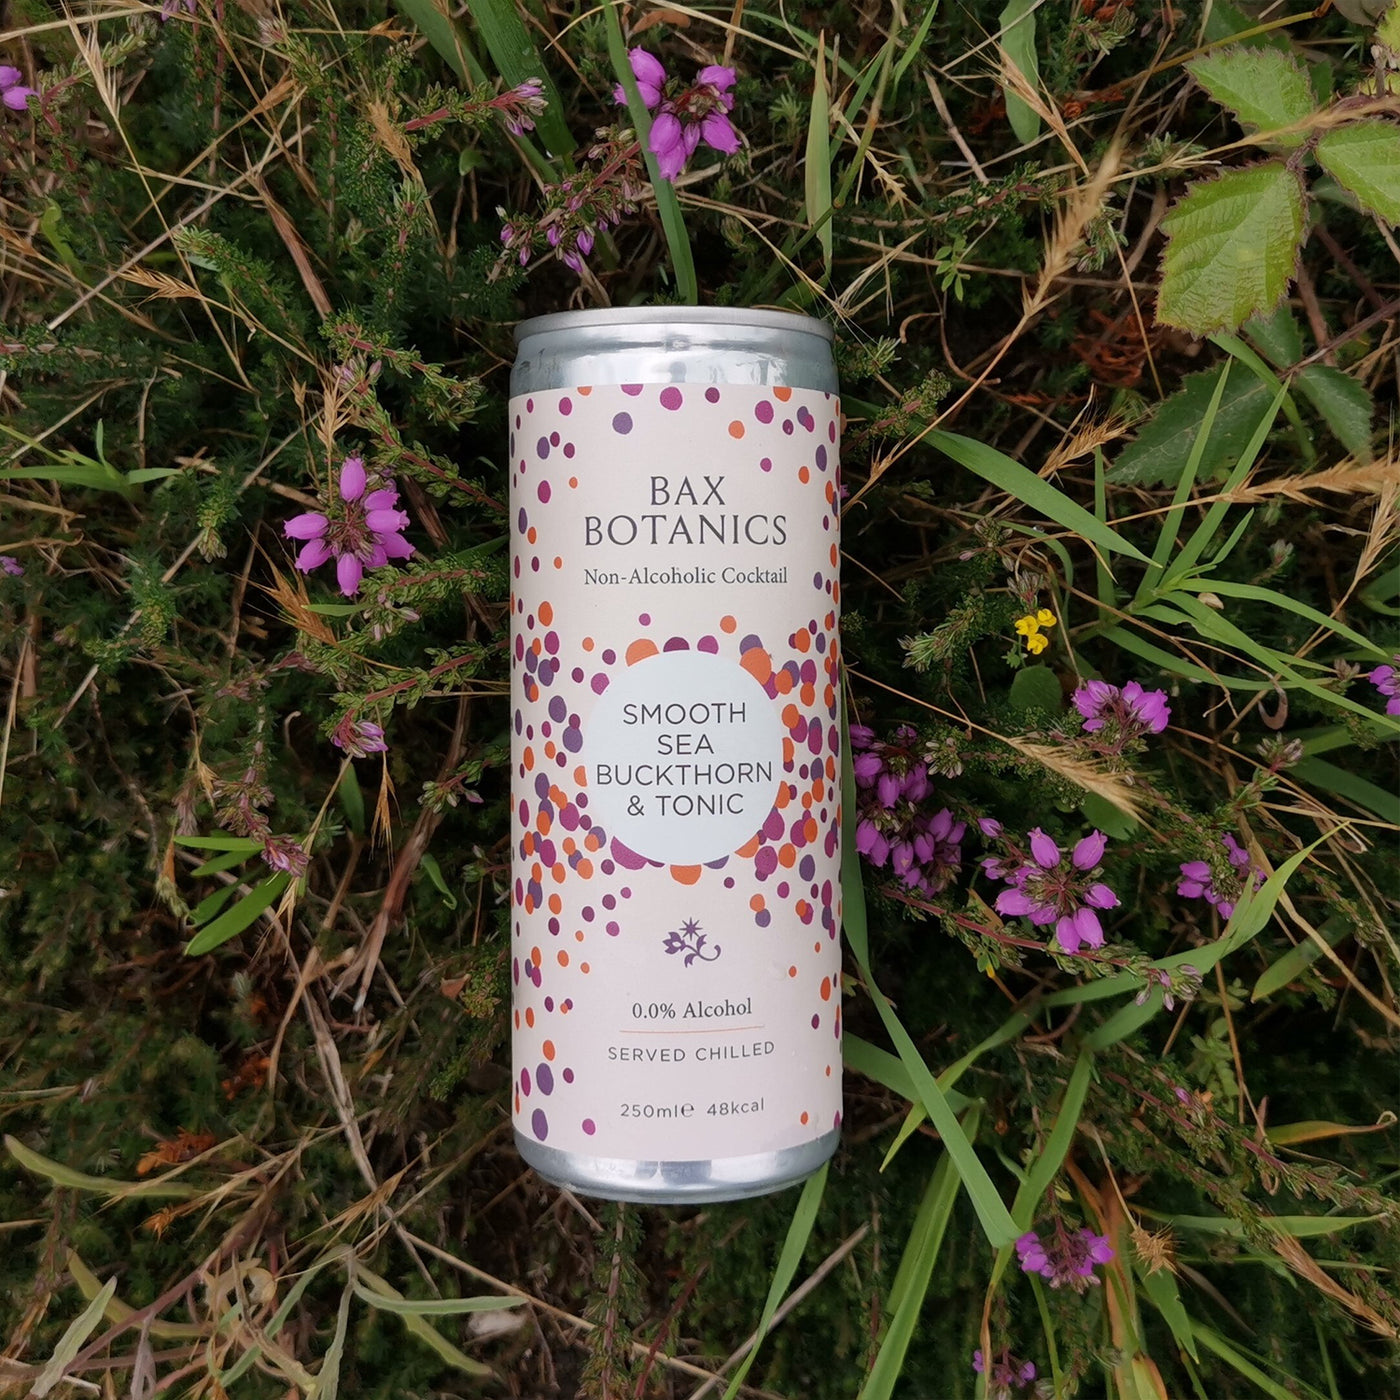 Bax Botanics Sea Buckthorn & Tonic 4-Pack - Non-Alcoholic Gin & Tonic